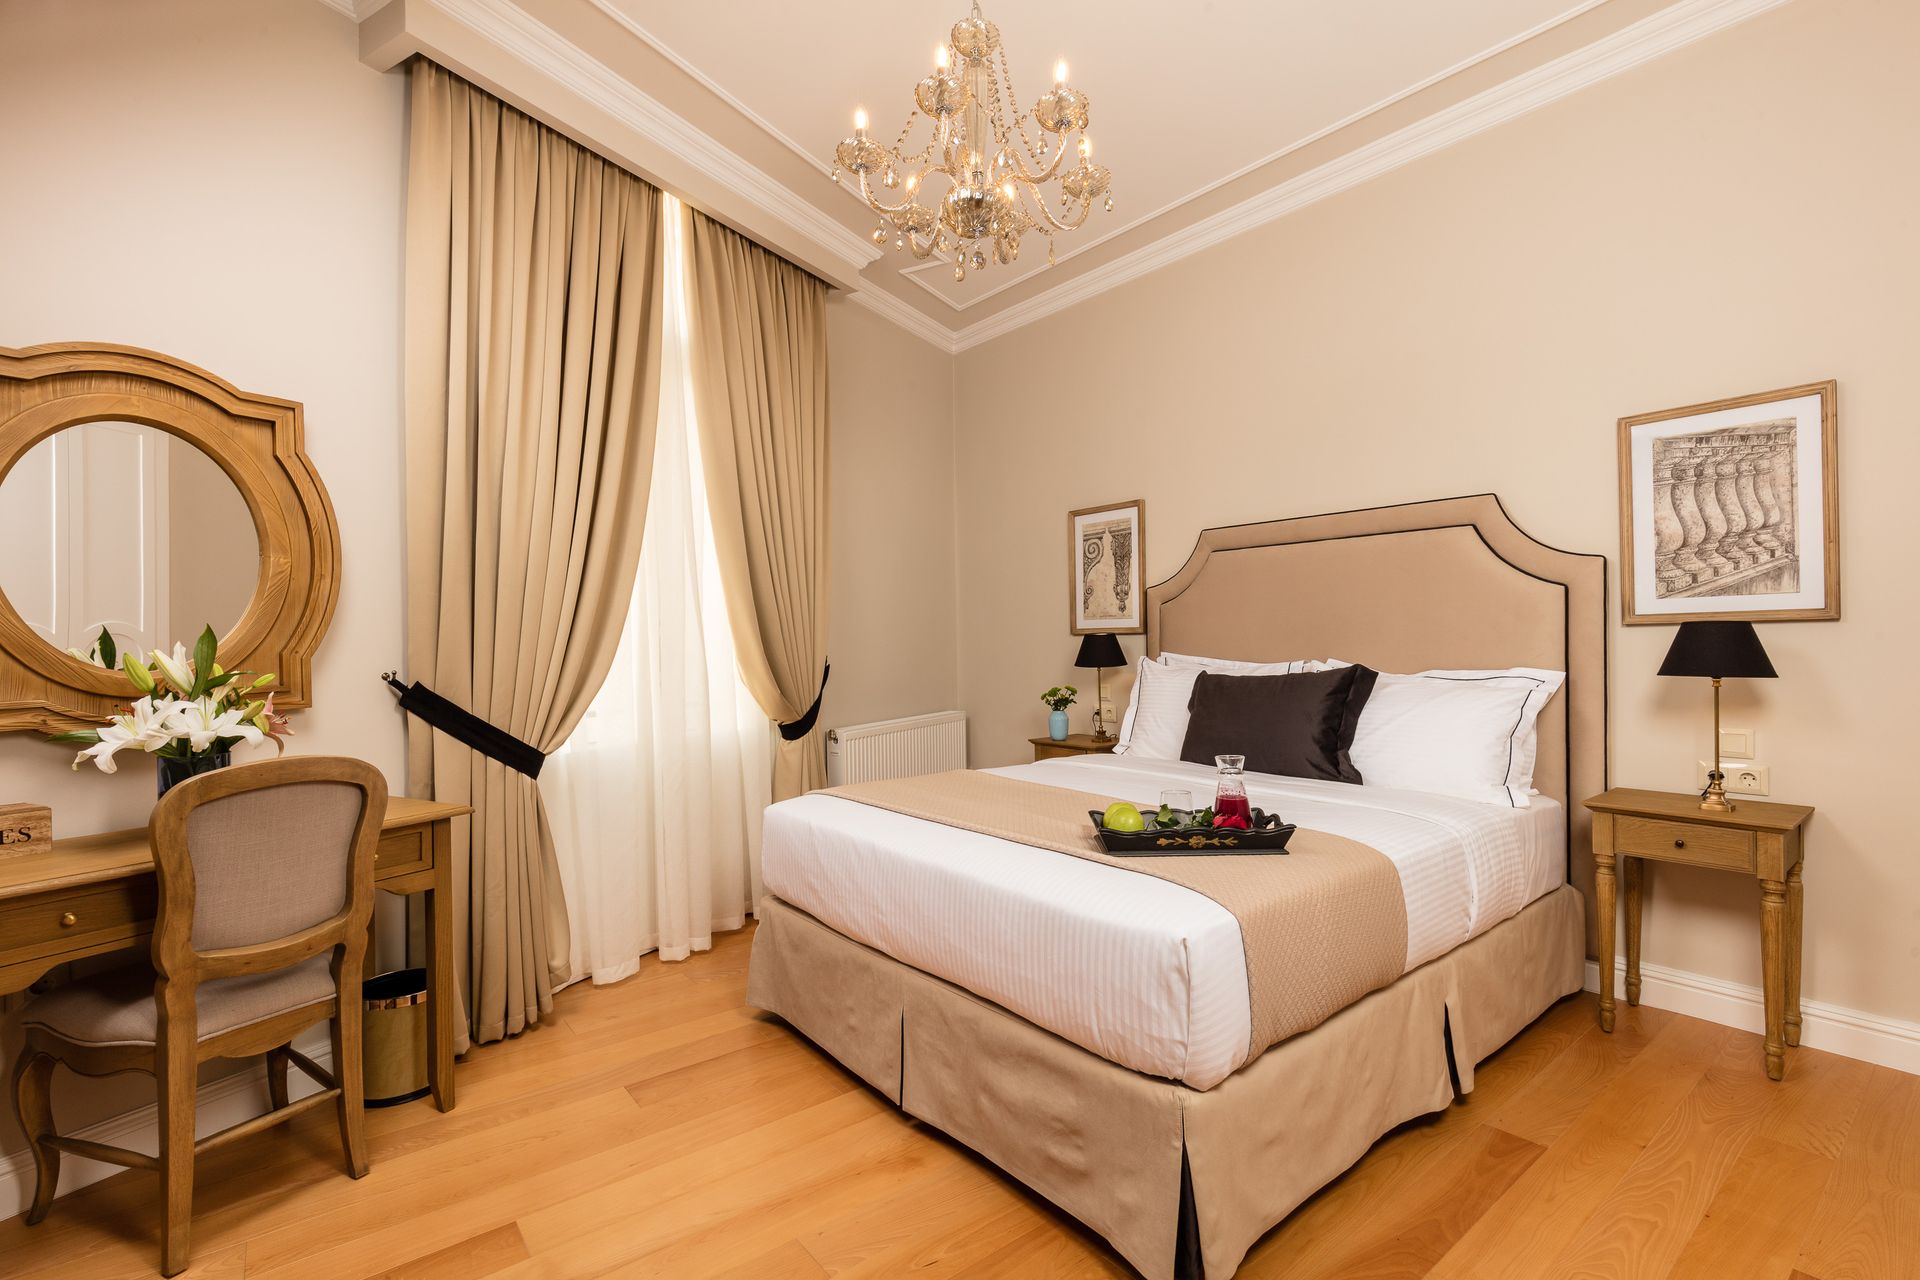 4* Athens Mansion Luxury Suites - Αθήνα ✦ 2 Ημέρες (1 Διανυκτέρευση) ✦ 2 άτομα ✦ 2 ✦ έως 30/09/2022 ✦ Στο κέντρο της Αθήνας!